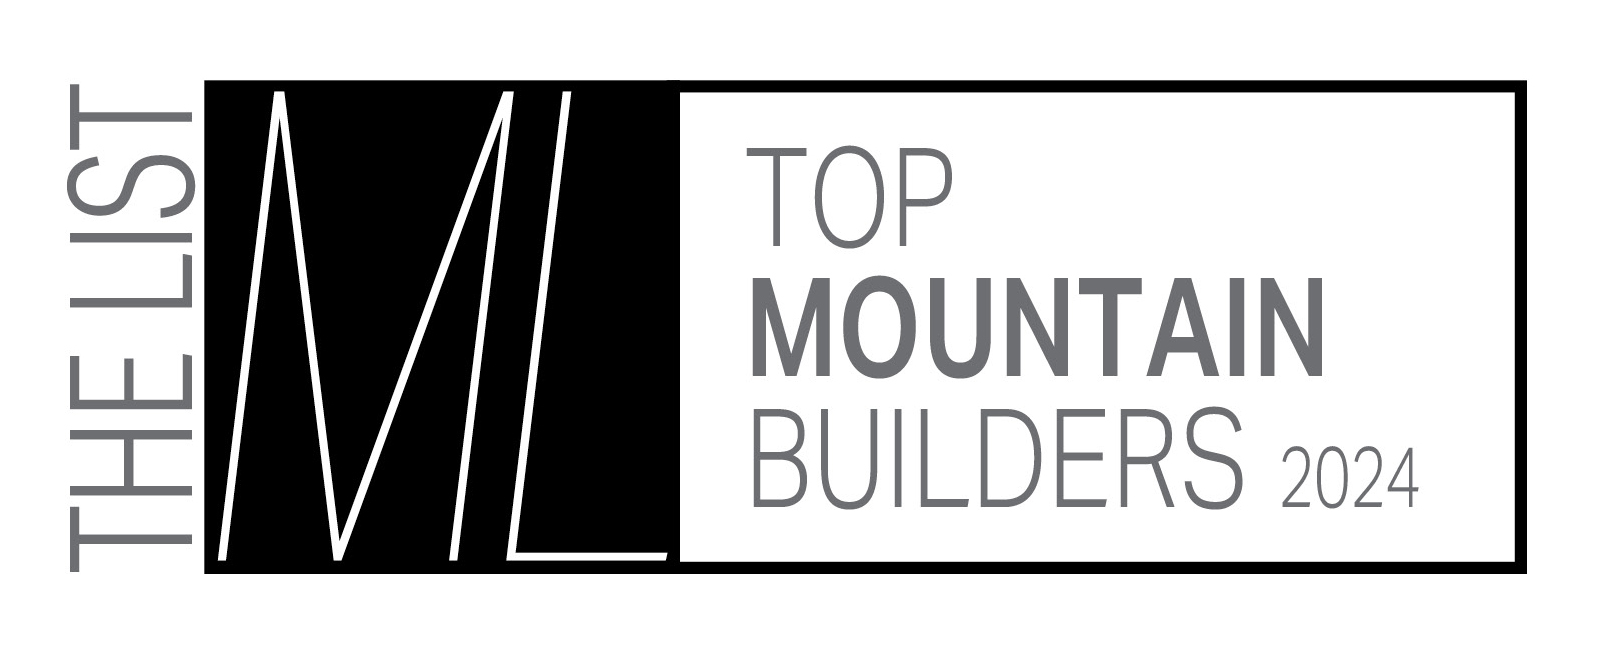 Daniel Fraiman Construction recognized as a 2024 Top Mountain Builder in Mountain Living Magazine. 